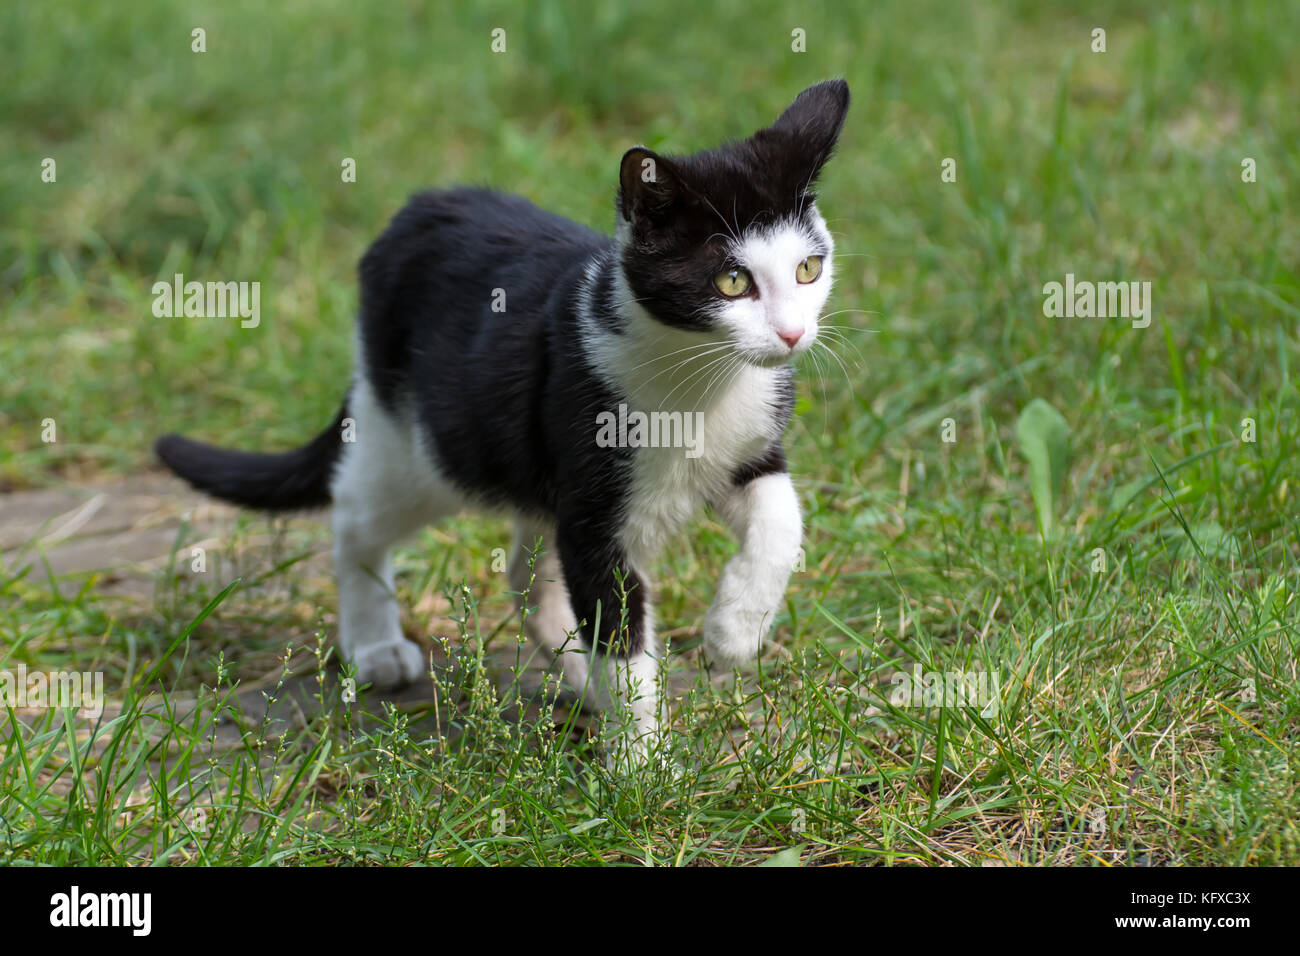 Beautiful black and white kitten walking on the grass Stock Photo